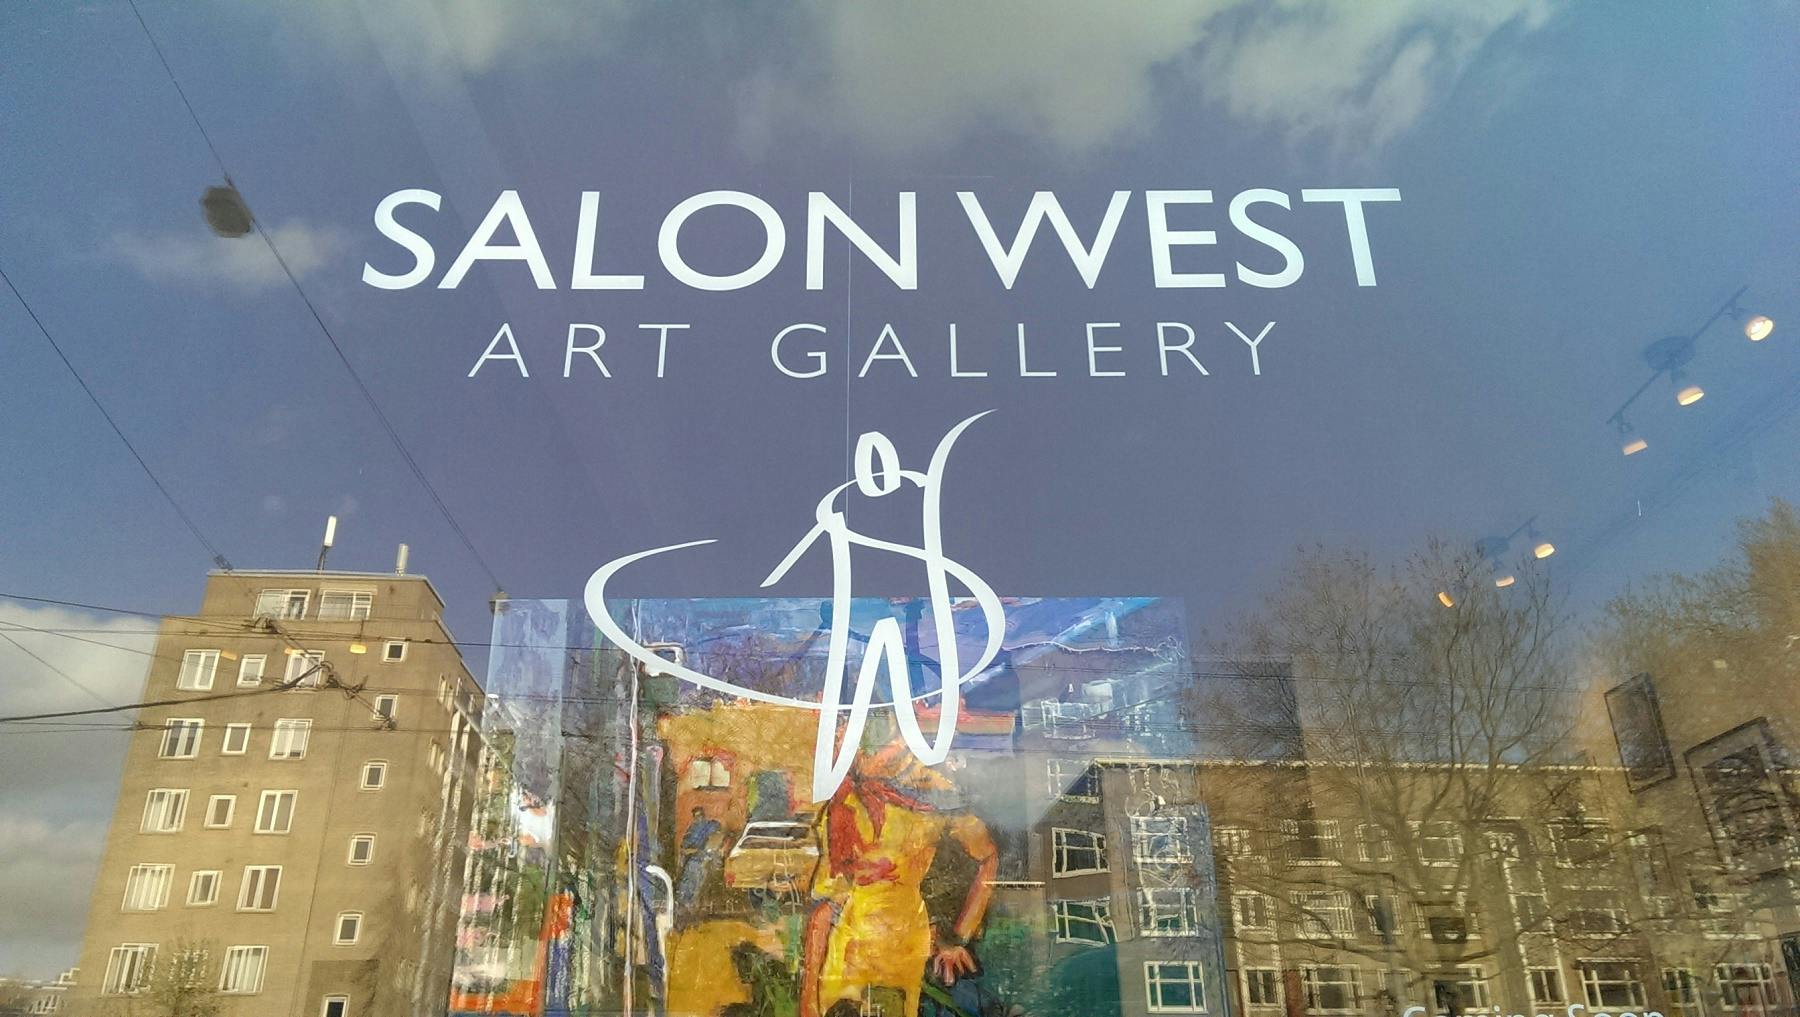 Art Gallery Salon West